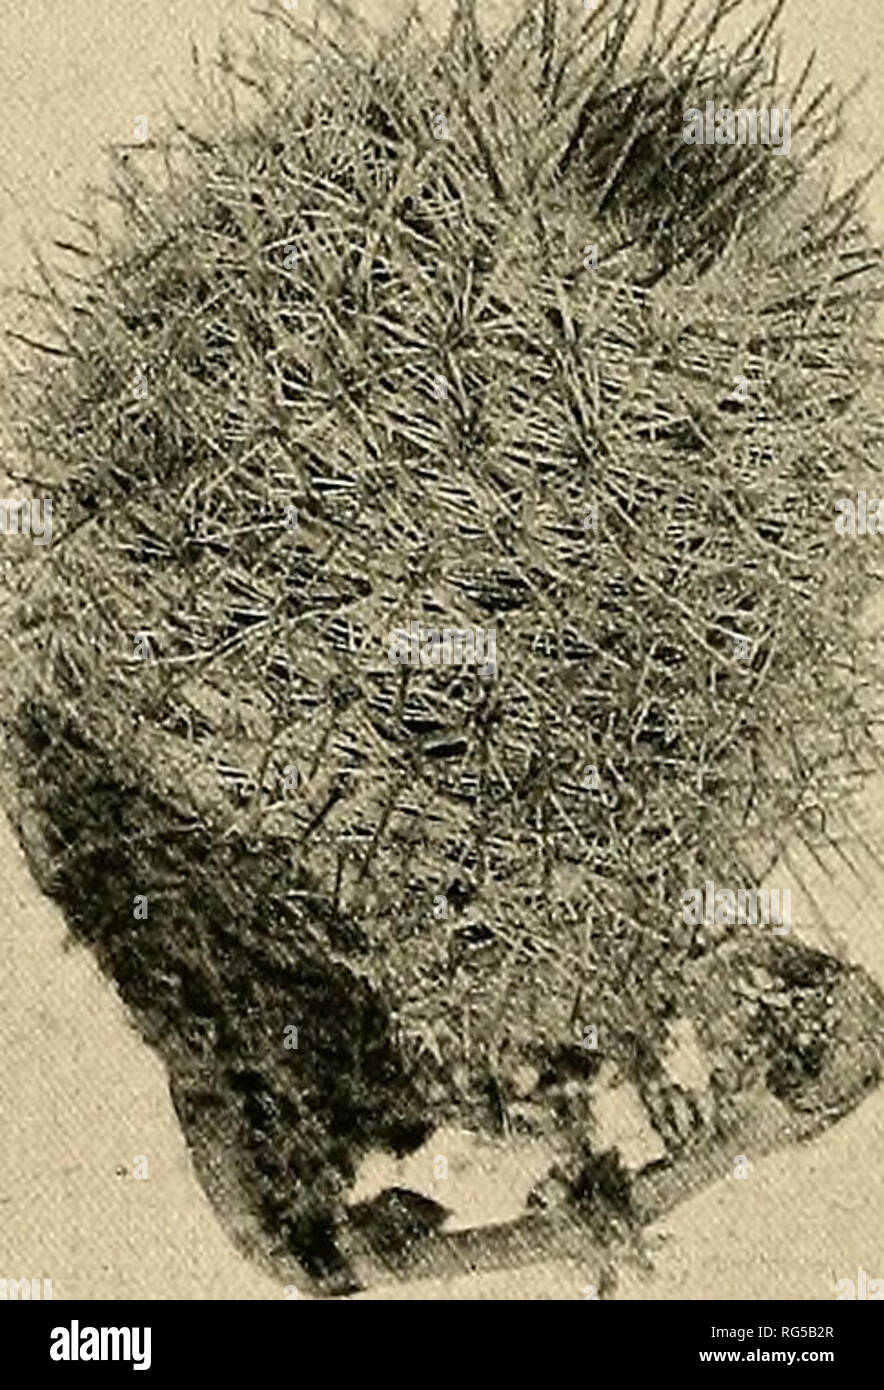 . The Cactaceae : descriptions and illustrations of plants of the cactus family. . Fig. 116.—Neomammillaria celsiana. 68. Neomammillaria celsiana (Lemaire). Manunillaria celsiana Lemaire, Cact. Gen. Nov. Sp. 41. 1839. Mammillaria miiehlenpfordiii Forster, AUg. Gartenz. 15: 49. 1847. Mammillaria schaeferi Fennel, Allg. Gartenz. 15: 66. 1847. Mammillaria schaeferi longispijia Haage, Hamb. Gartenz. 17: 160. 1861. Cactus muehlenpfordtii Kuntze, Rev. Gen. PL i: 260. 1891. Cactus celsianus Kuntze, Rev. Gen. PL i: 261. 1891. Cactus schaeferi Kuntze, Rev. Gen. PL i: 261. 1891. {?) Mammillaria perringi Stock Photo